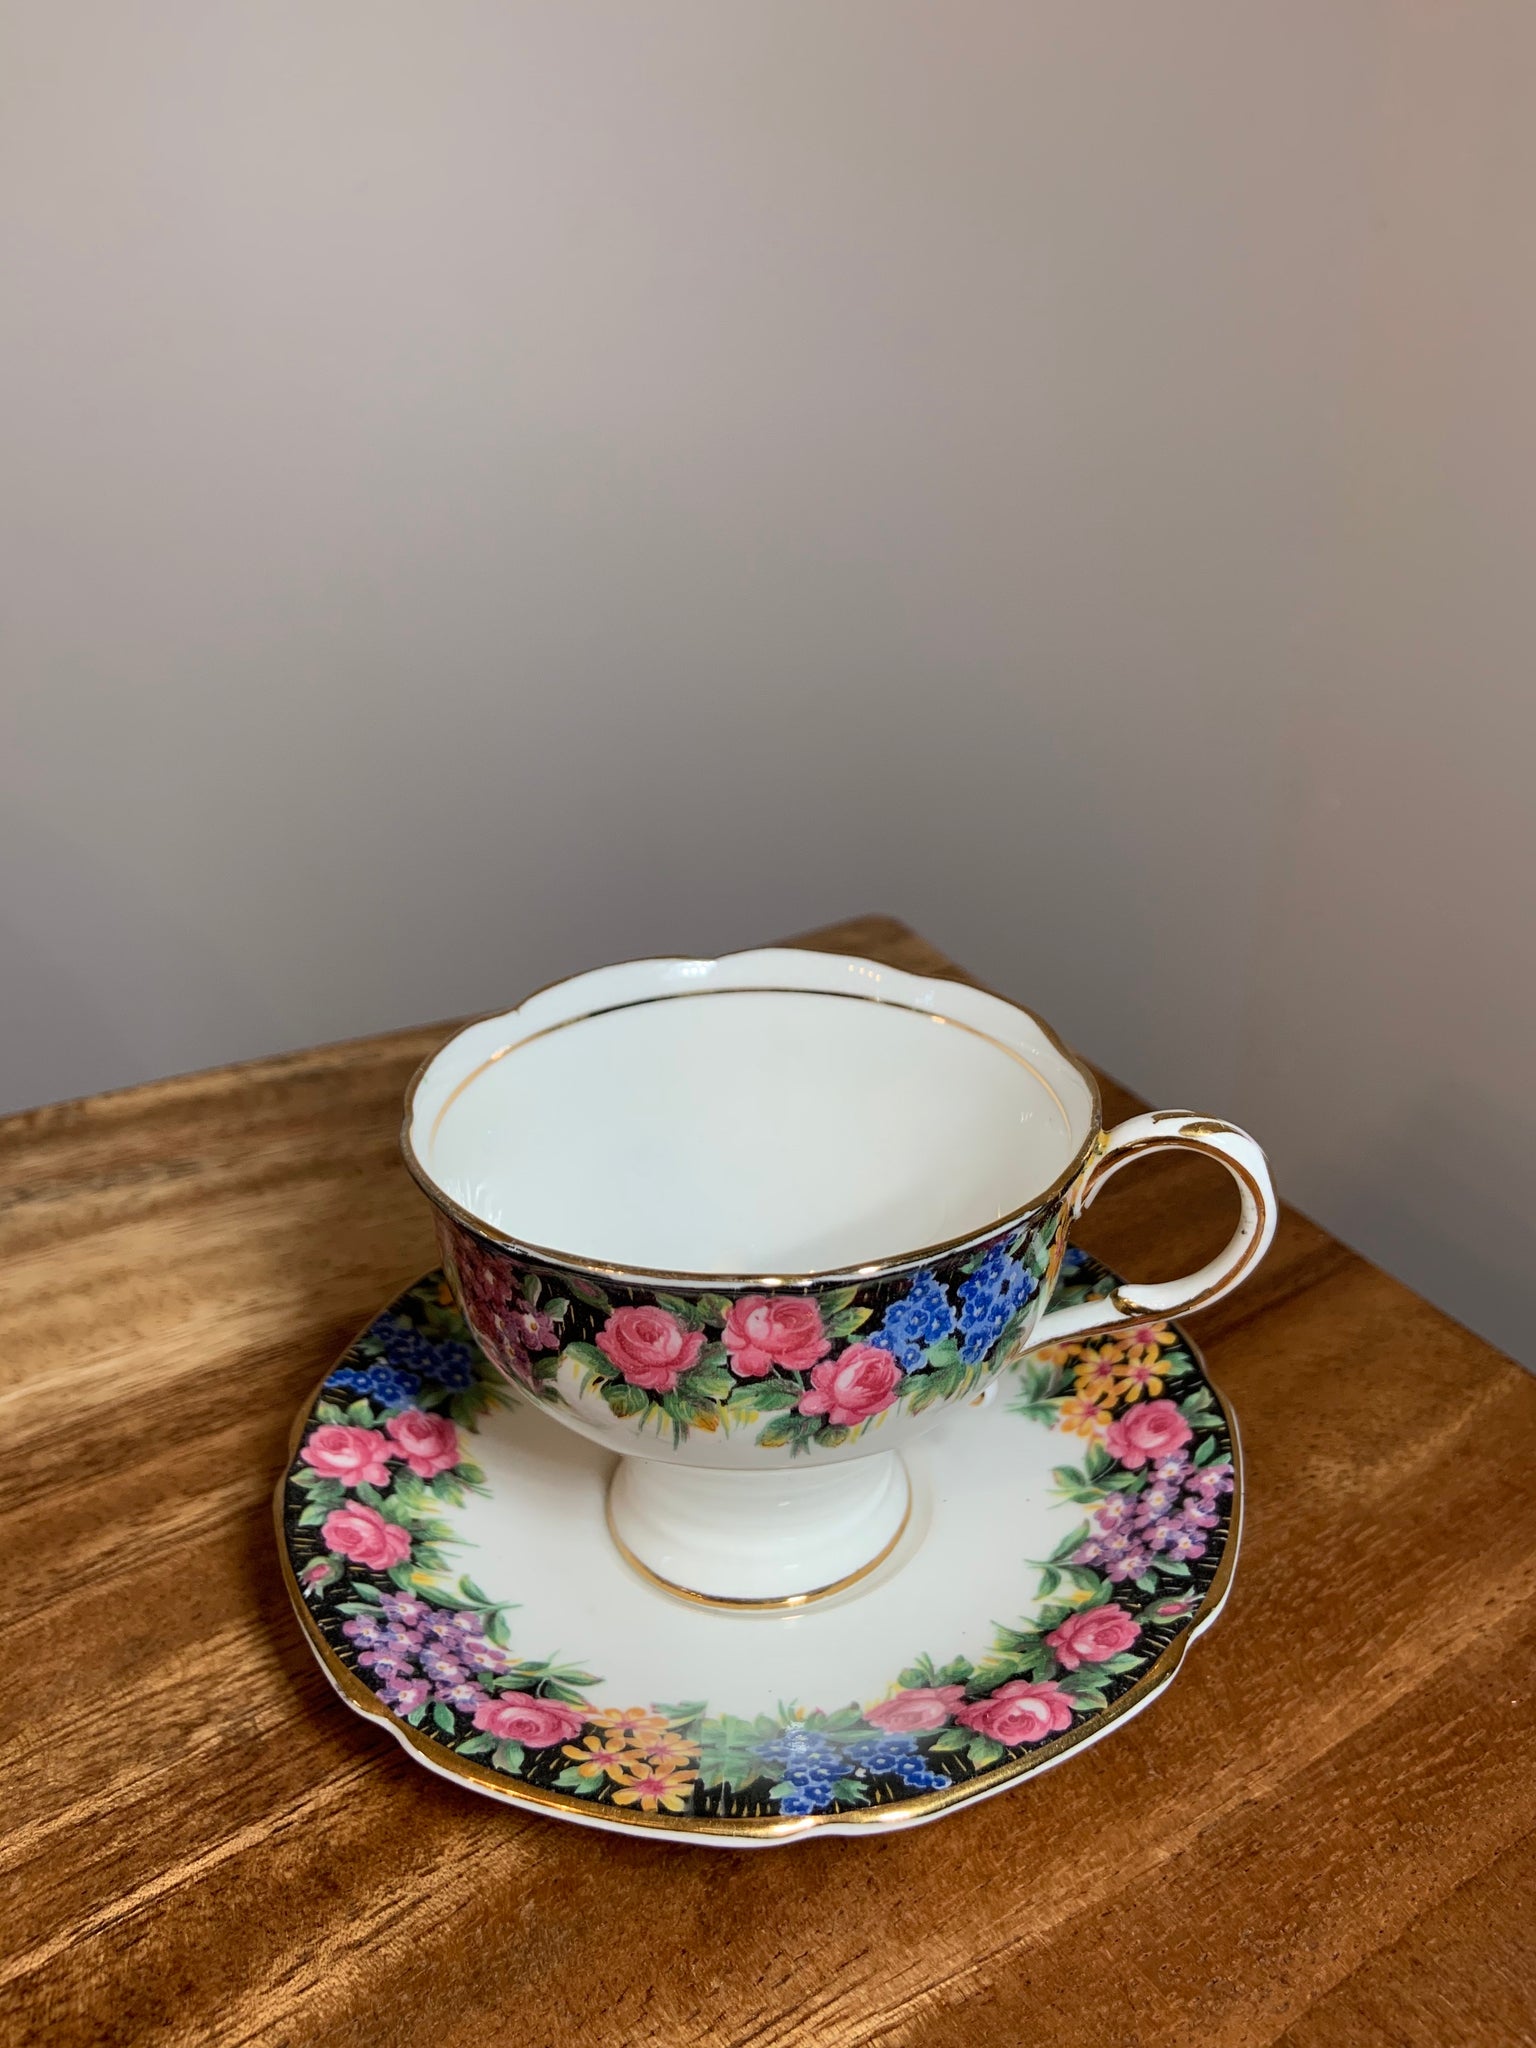 Paragon Old English Garden teacup & saucer